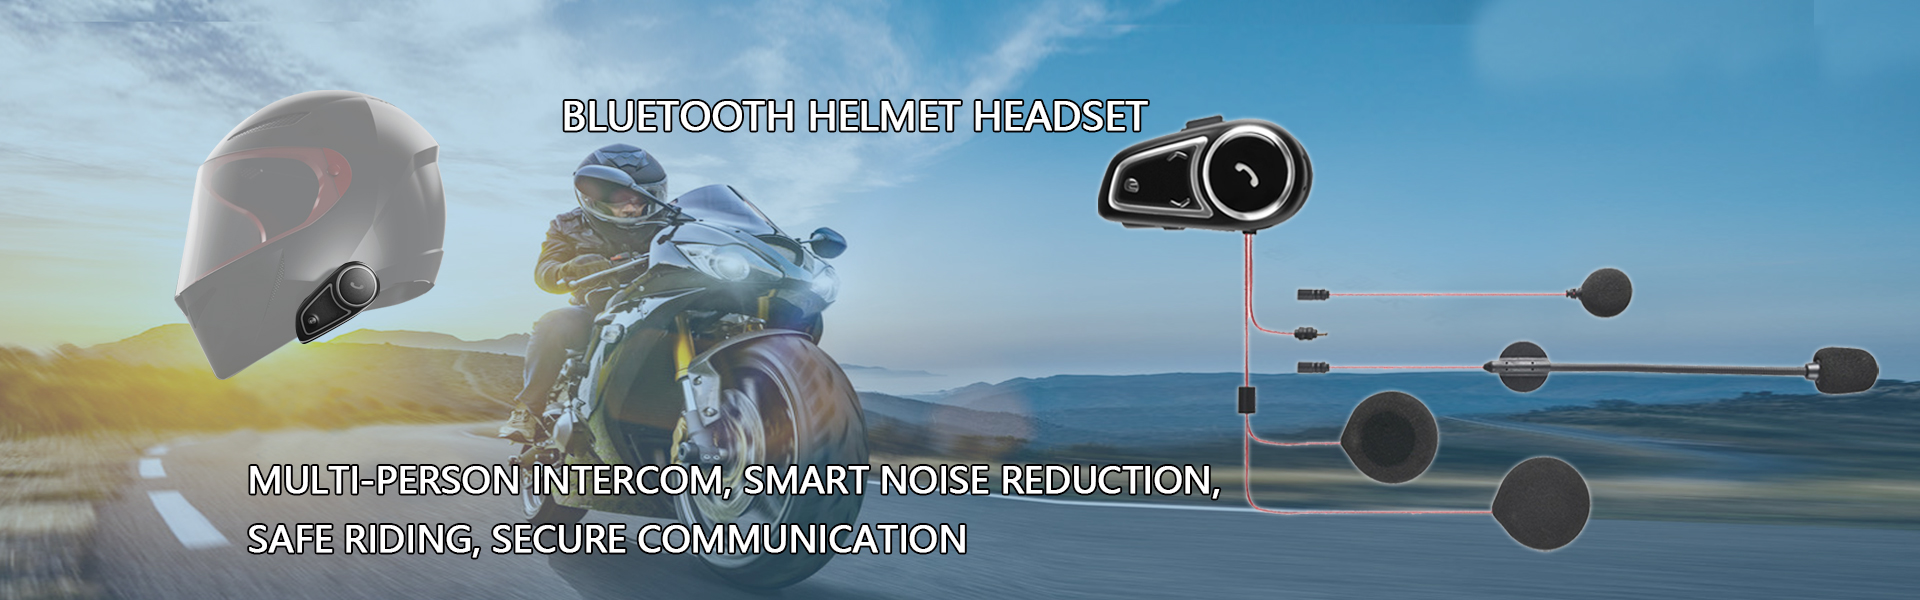 Bluetooth motorcycle headset & intercom from HXKK